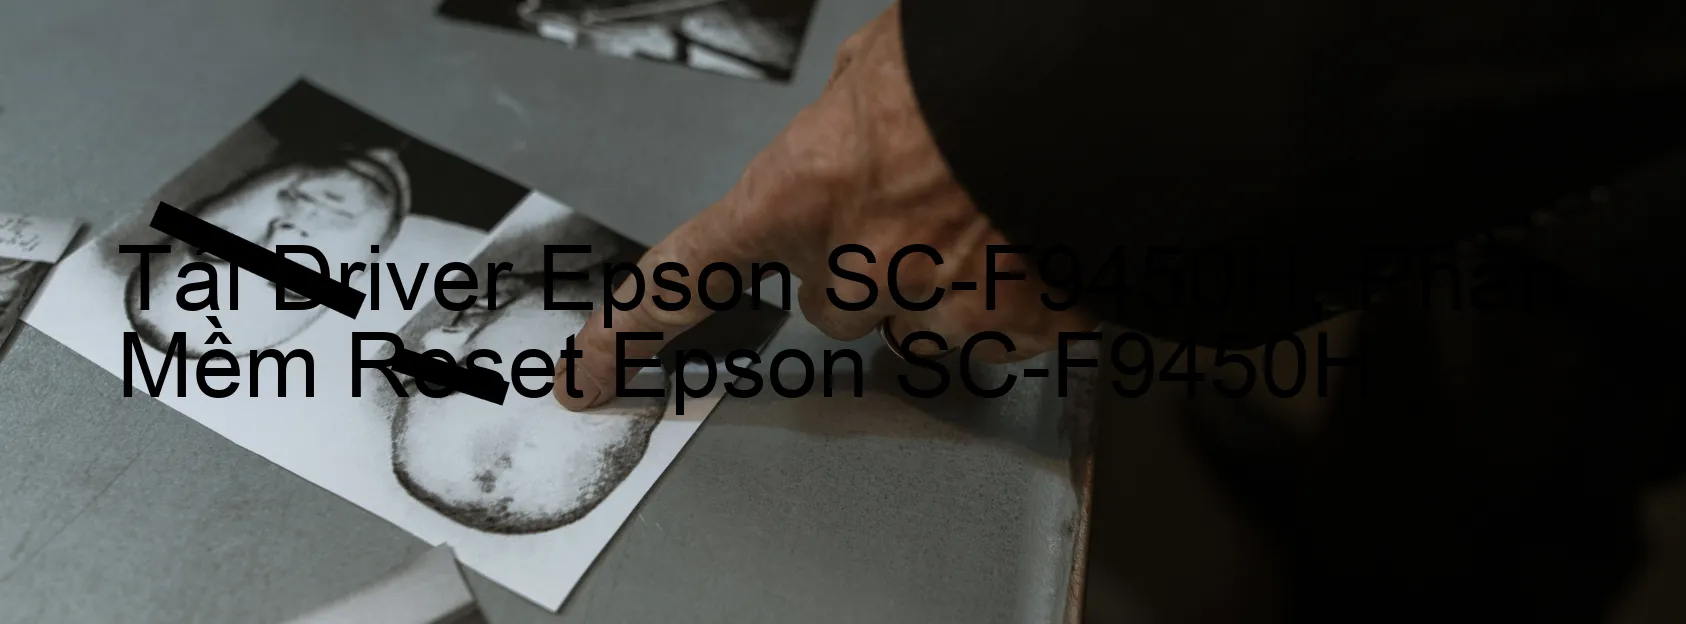 Driver Epson SC-F9450H, Phần Mềm Reset Epson SC-F9450H